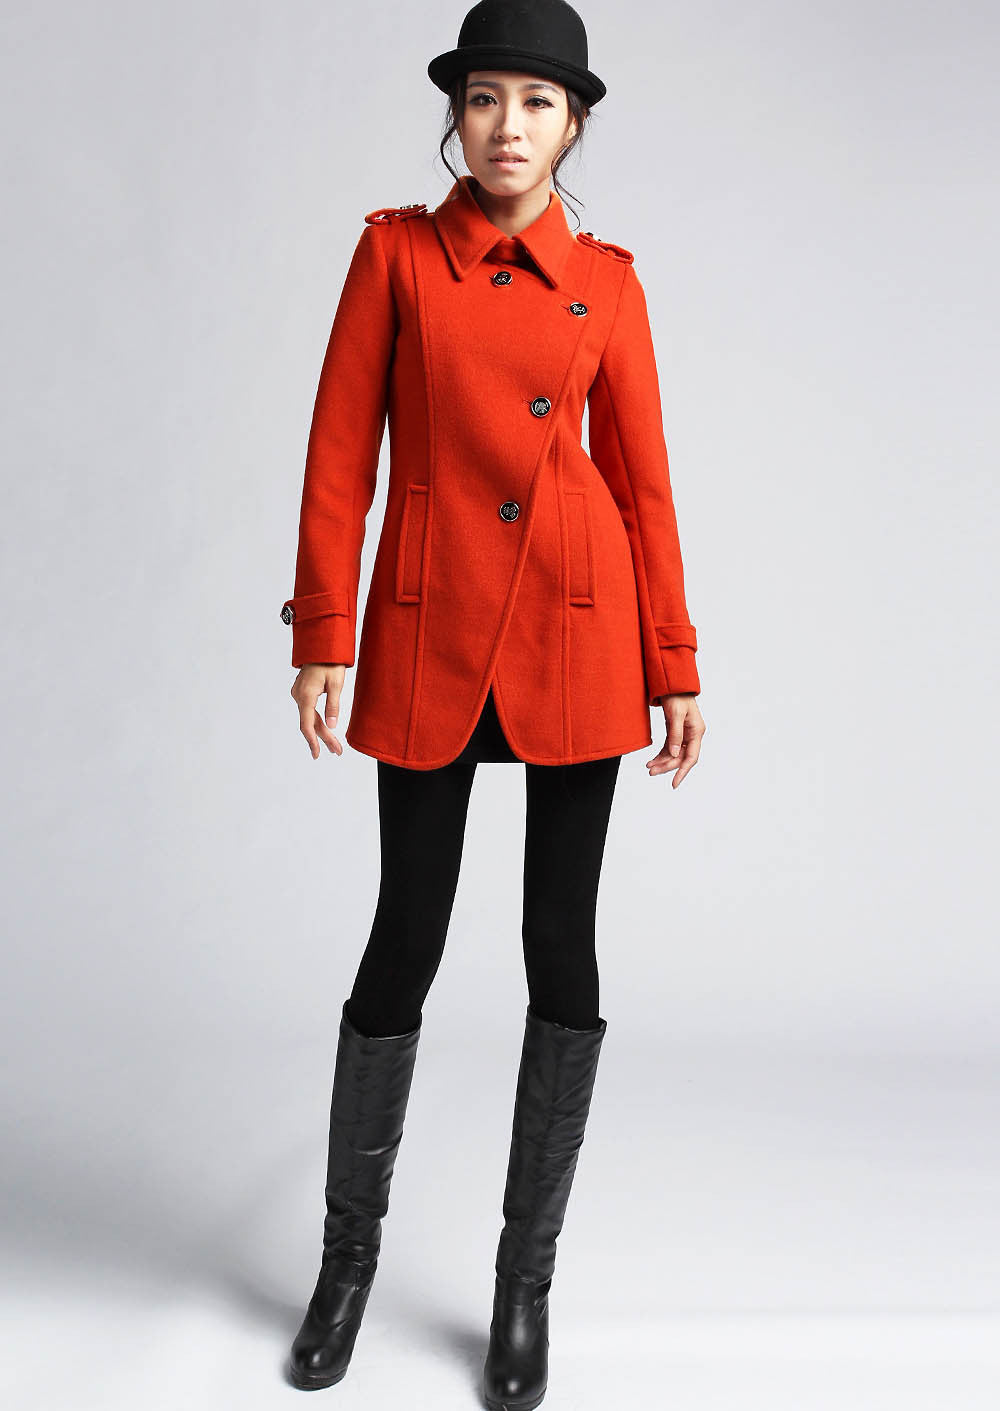 Orange Wool Coat Winter Jacket (403)